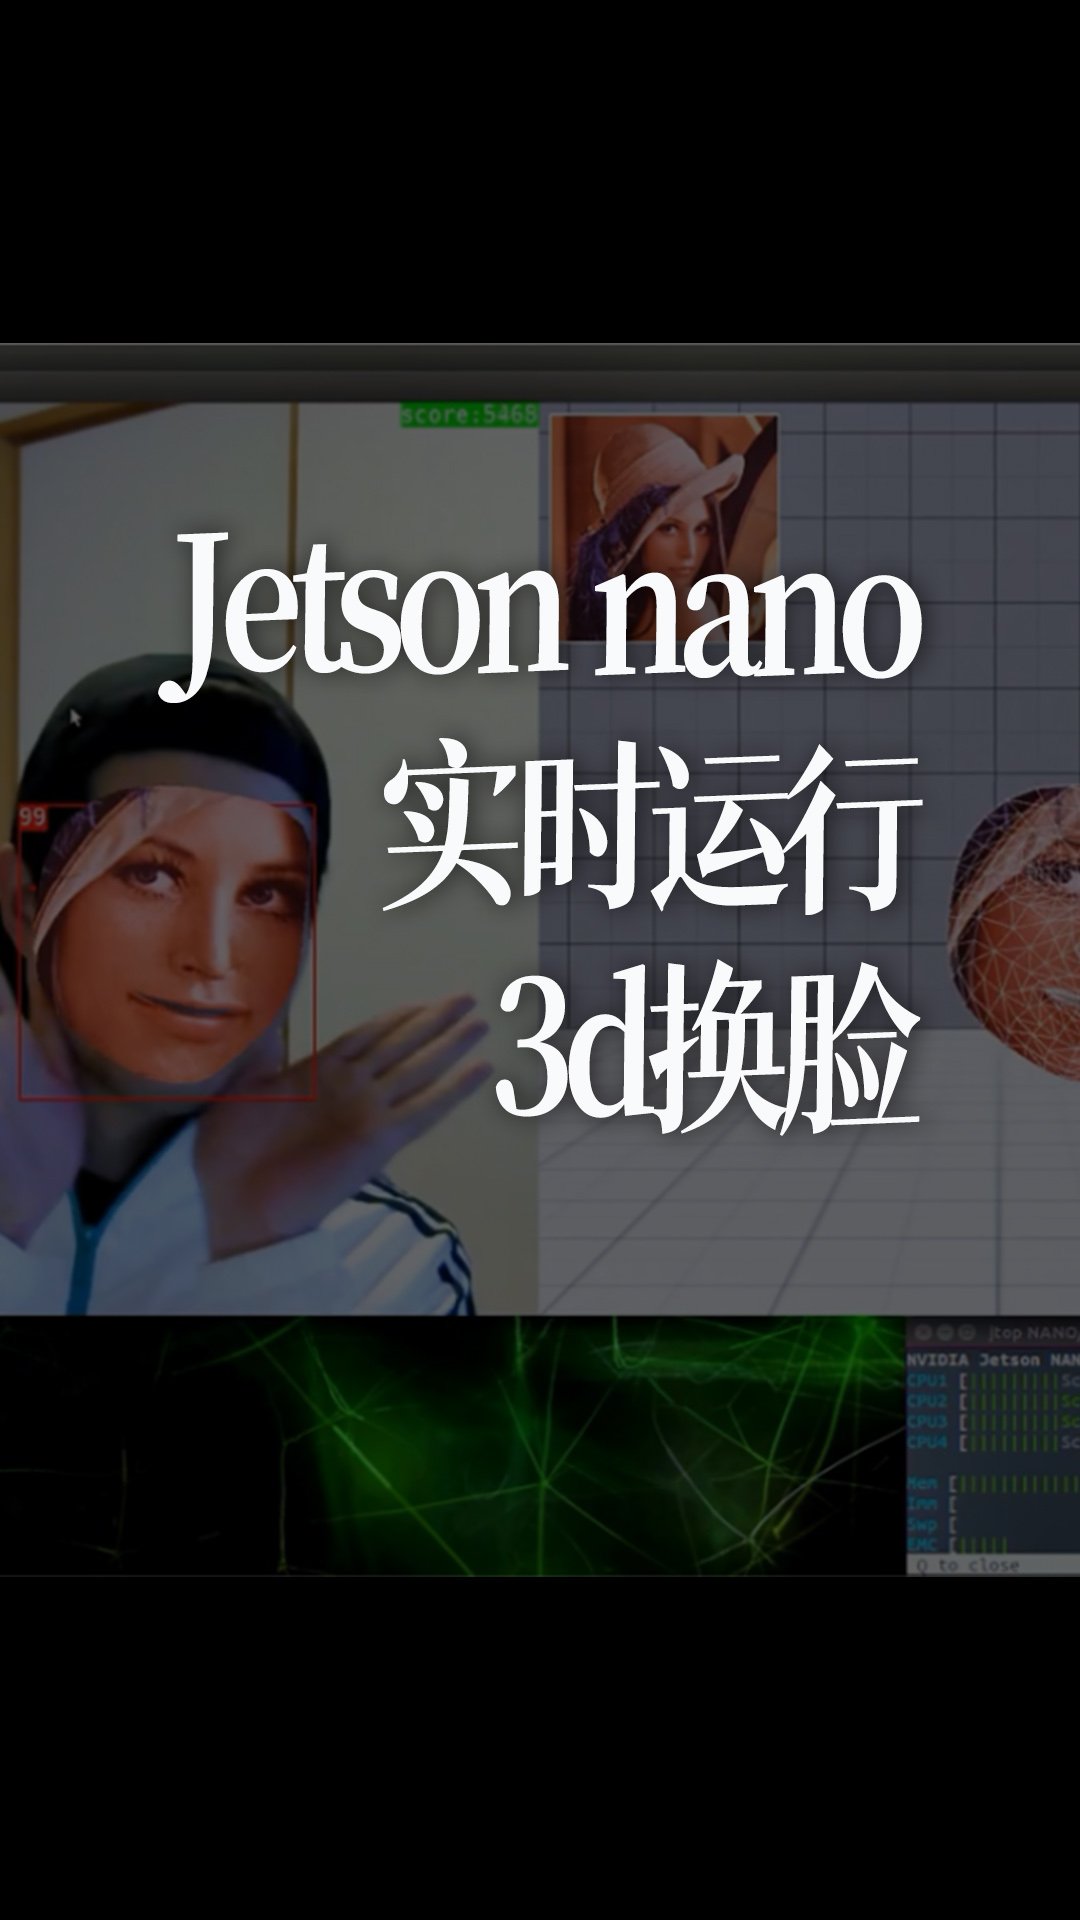 Jetson nano实时运行3d换脸